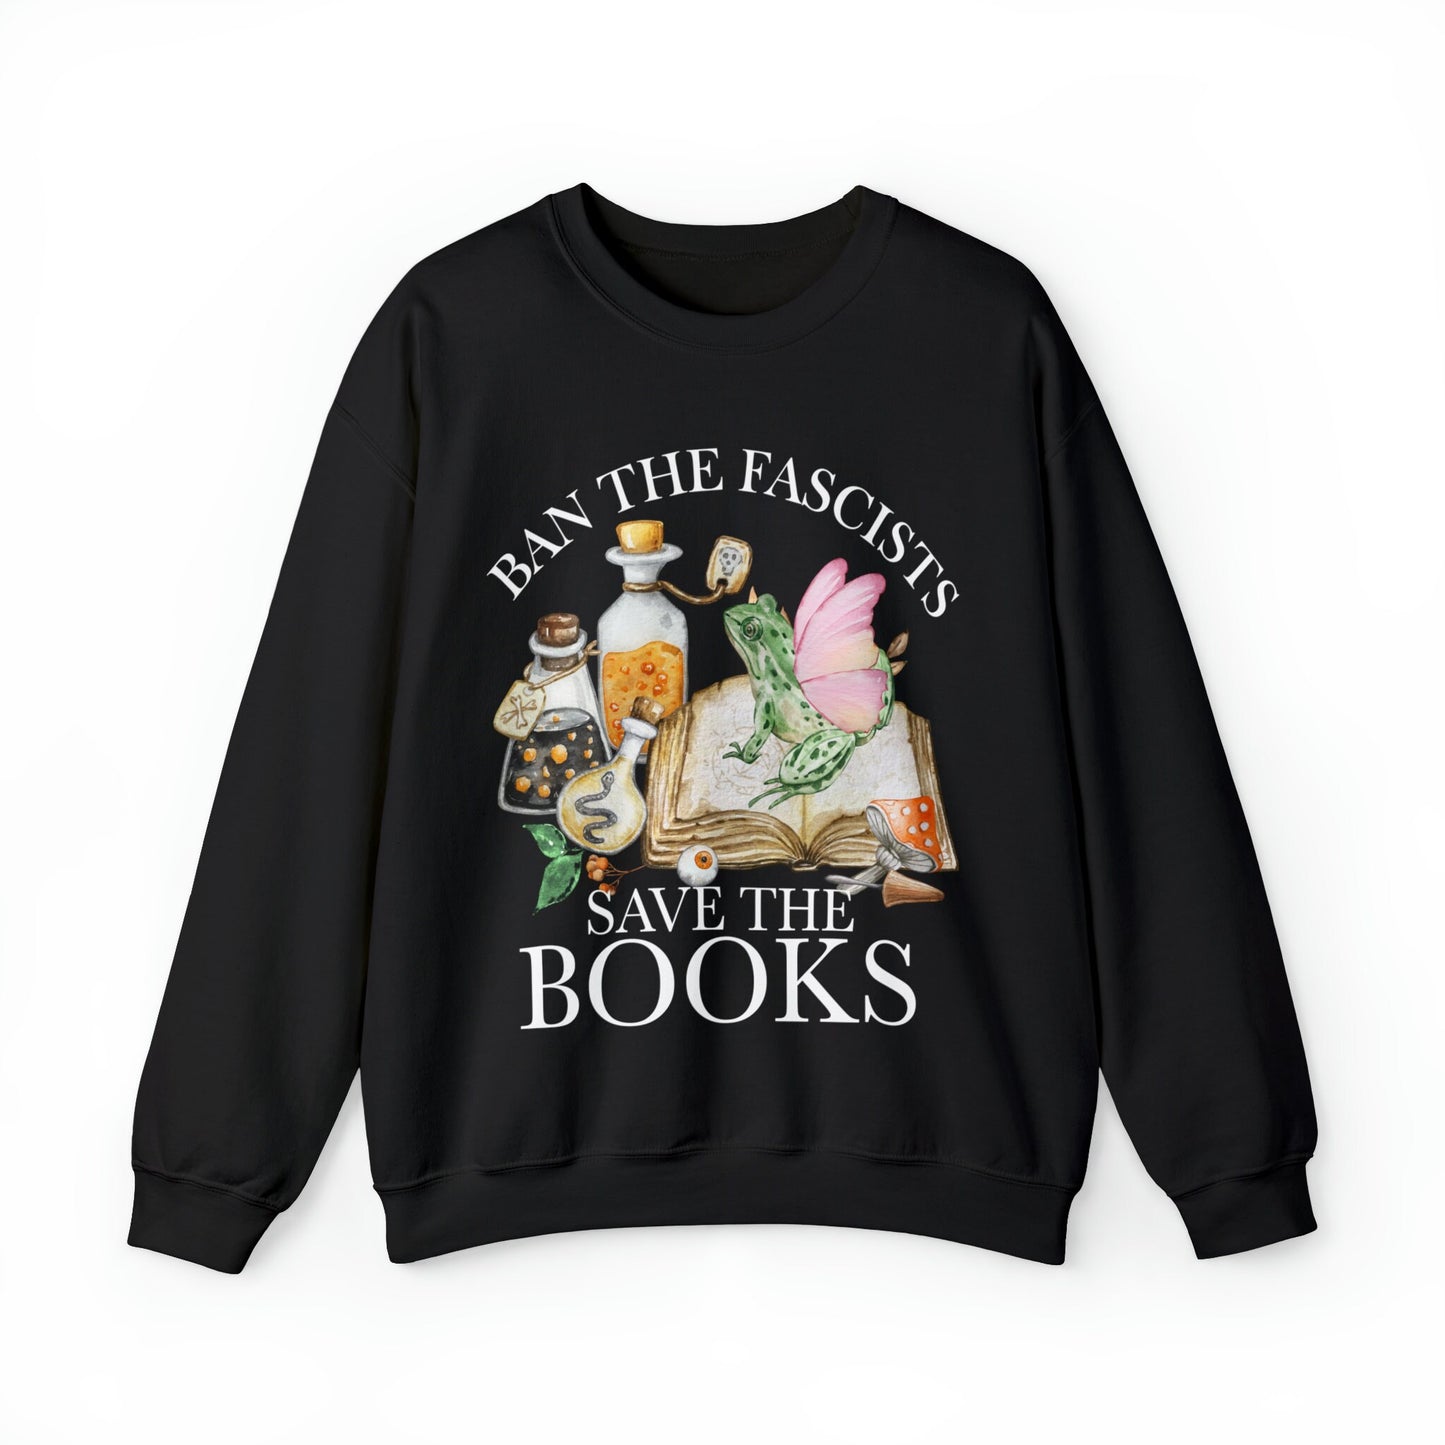 Ban the fascists save the books sweatshirt